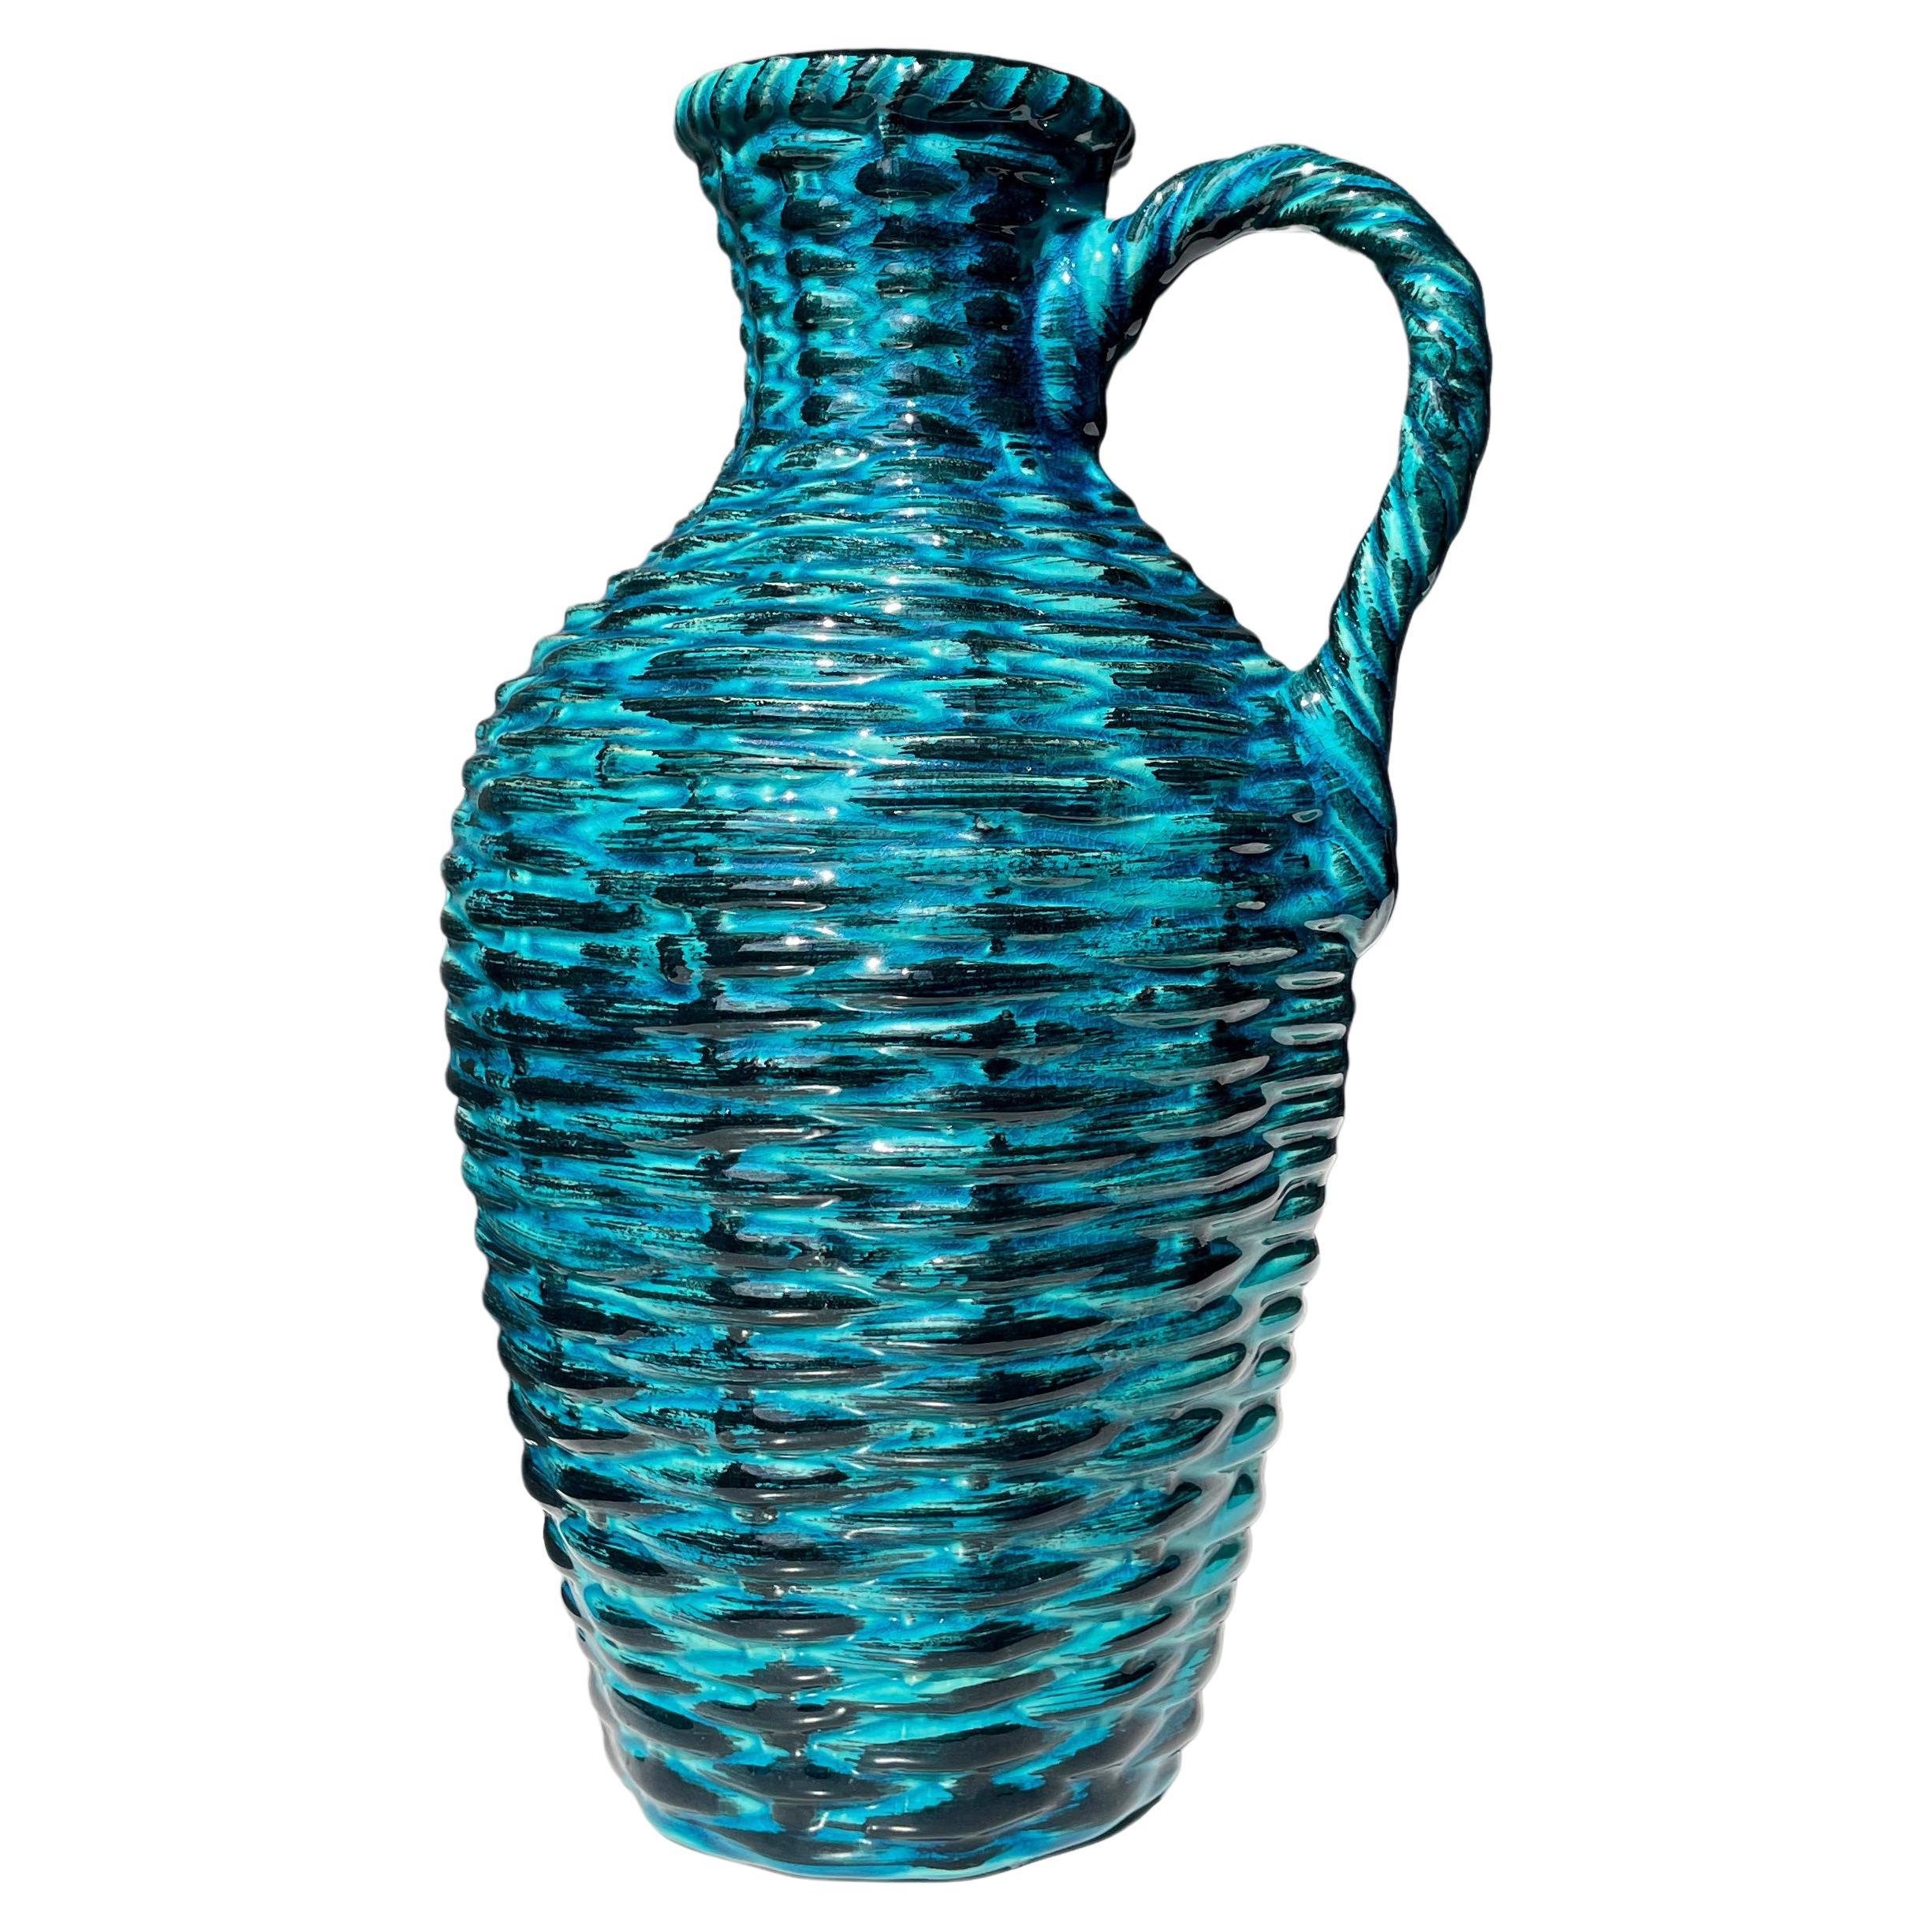 Tall 1970s Petrol, Black Braided Textured Bay Keramik Vase For Sale